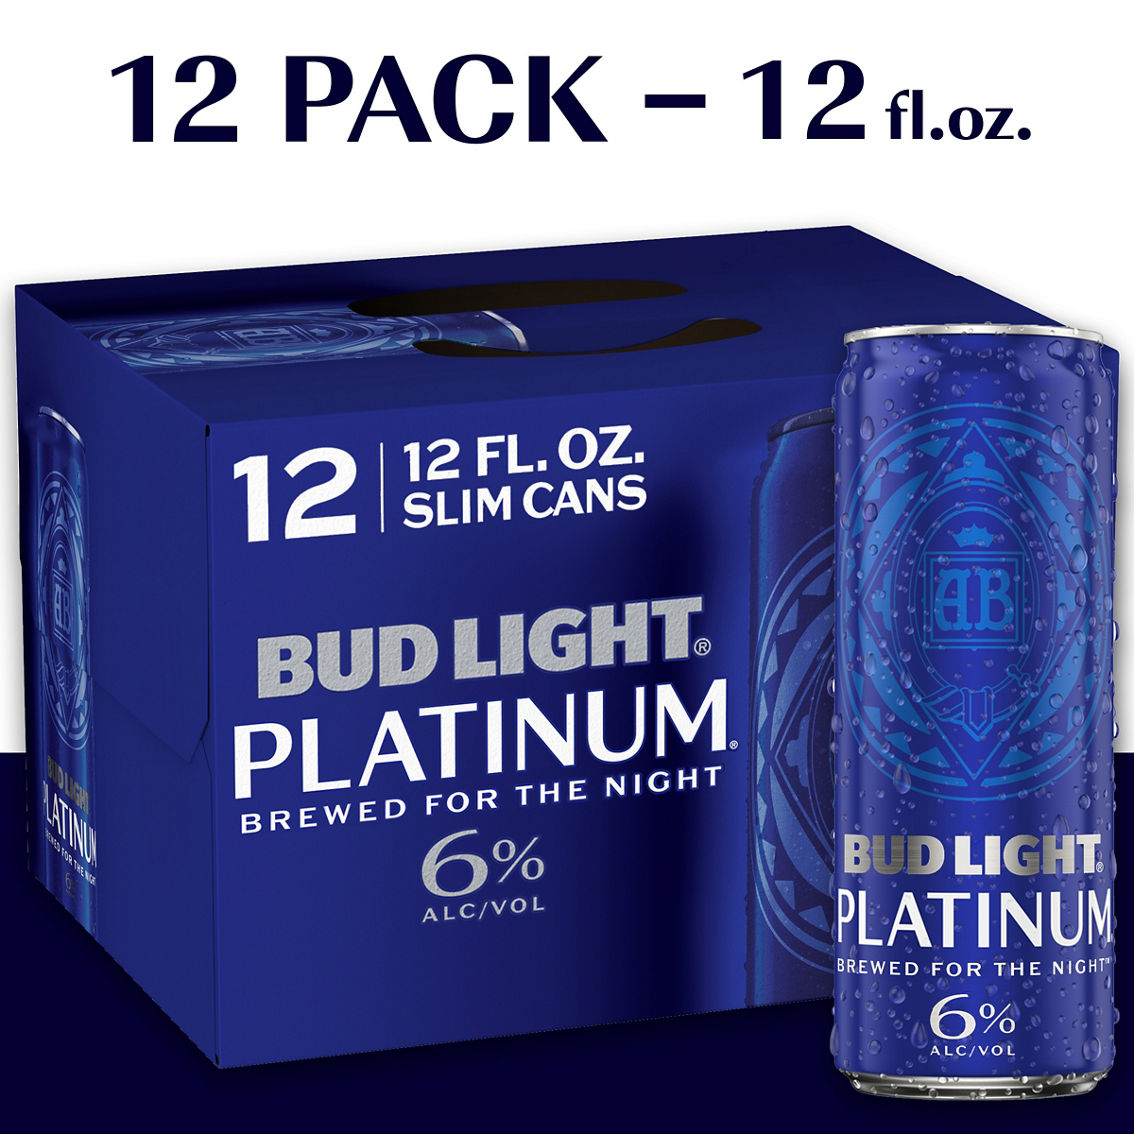 Bud Light Platinum 12 pk., 12 oz. Cans - Image 2 of 2